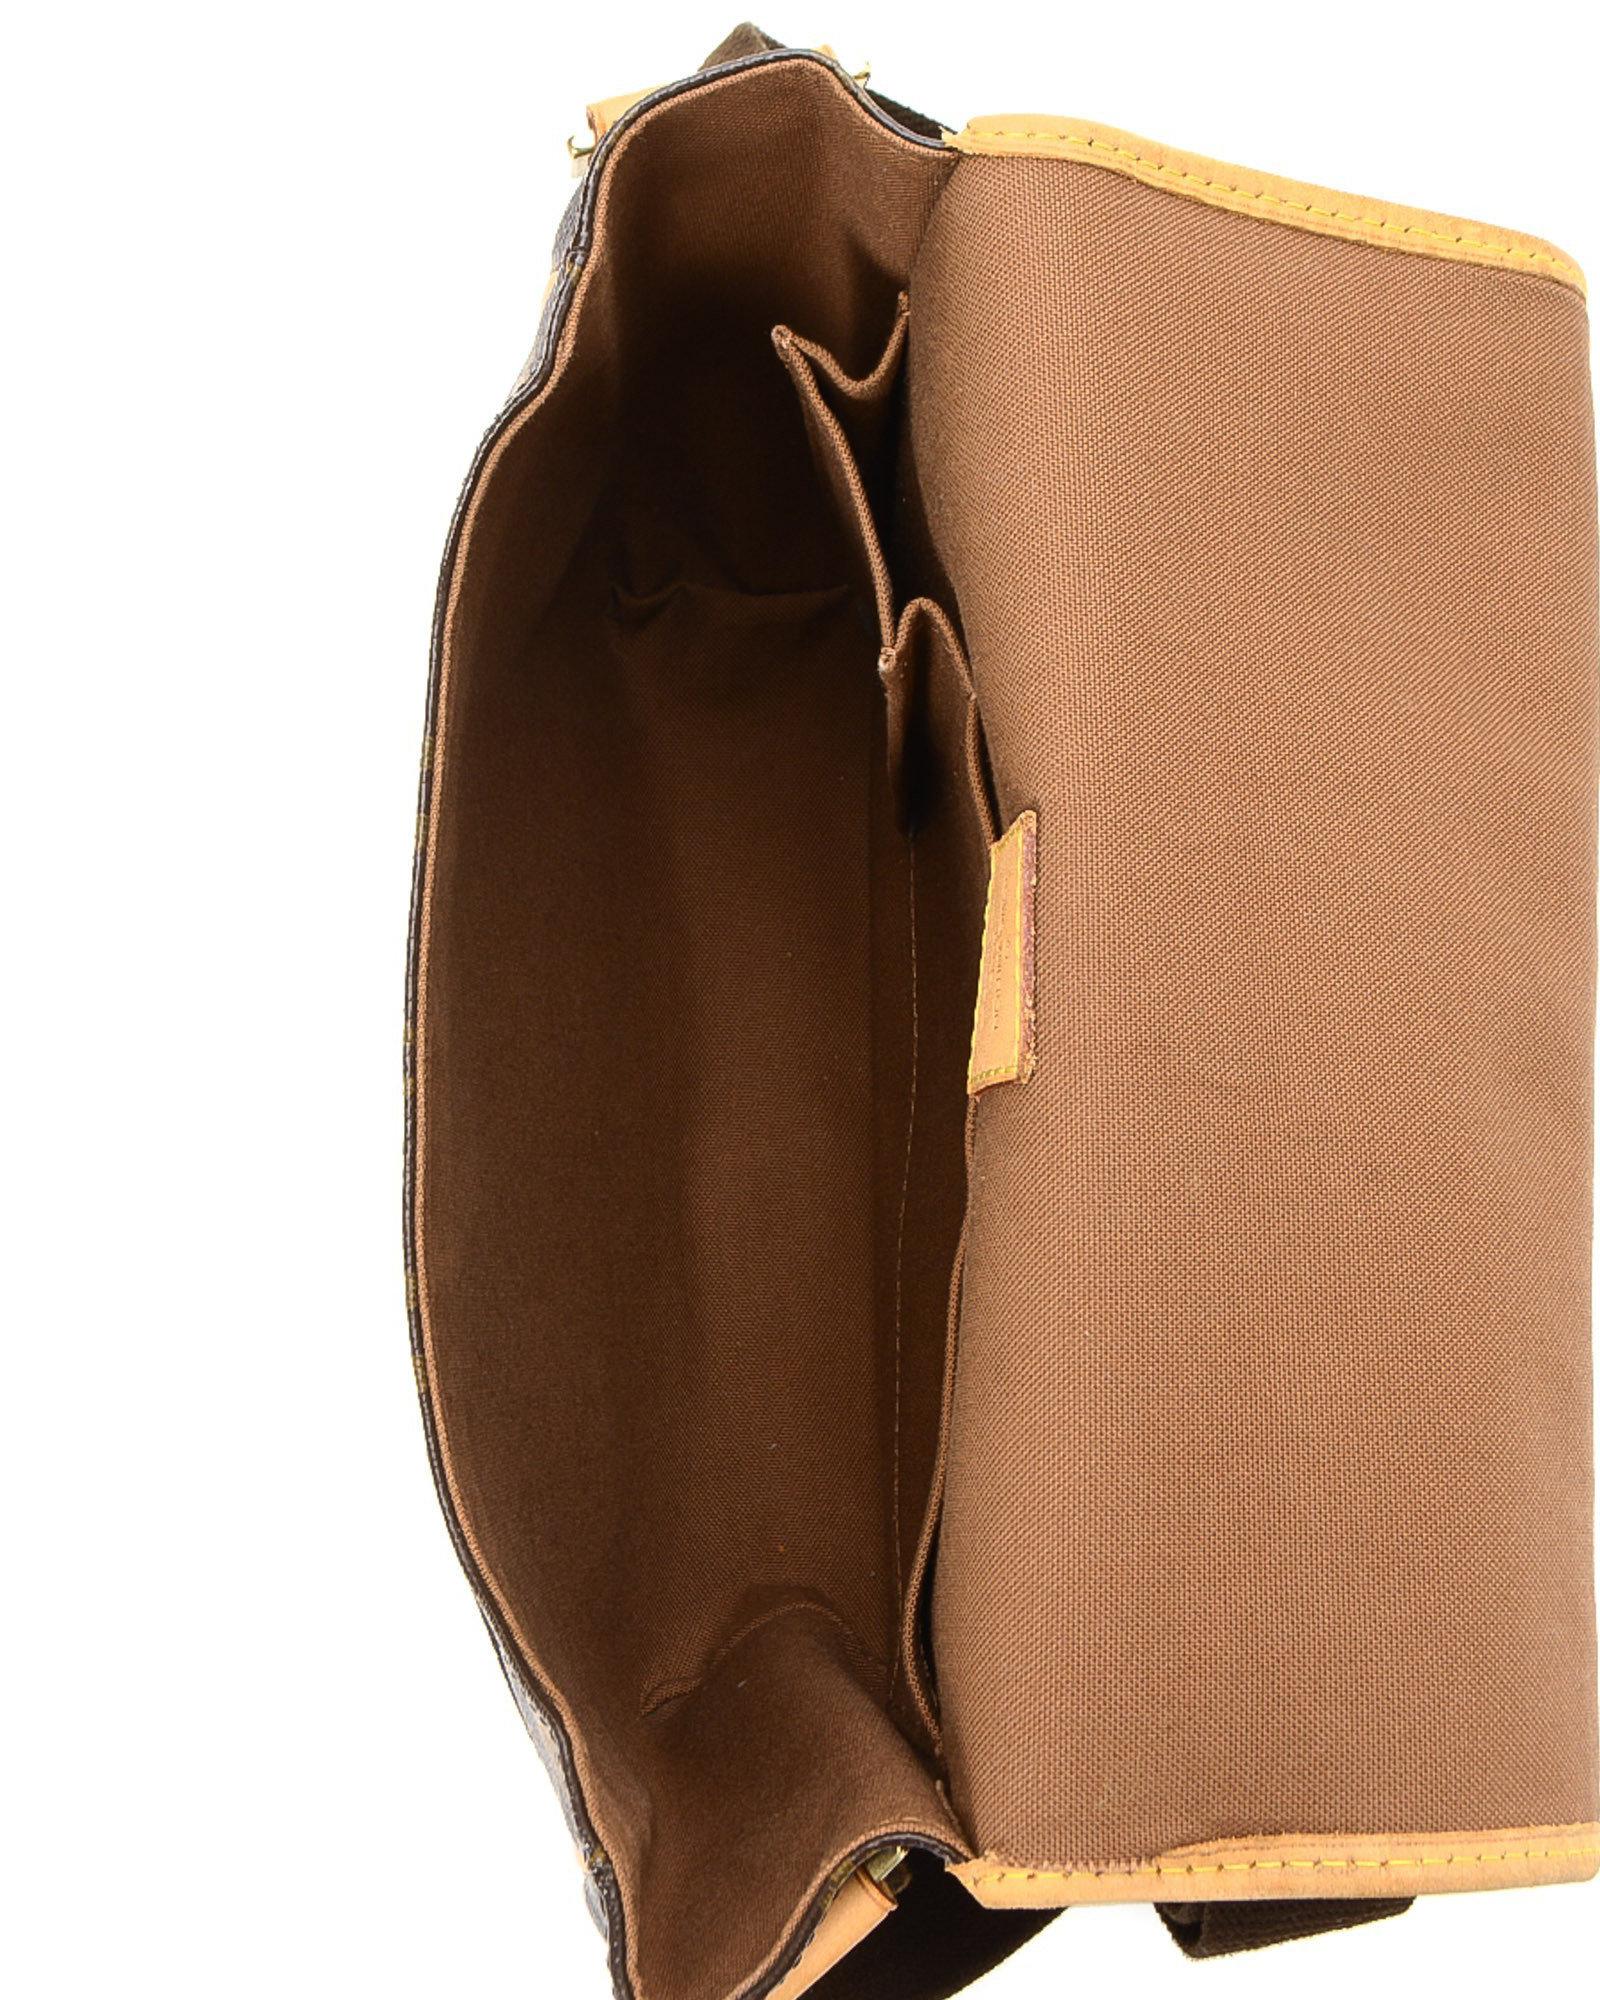 Louis Vuitton Canvas Messenger Bag - Vintage in Brown for Men - Lyst